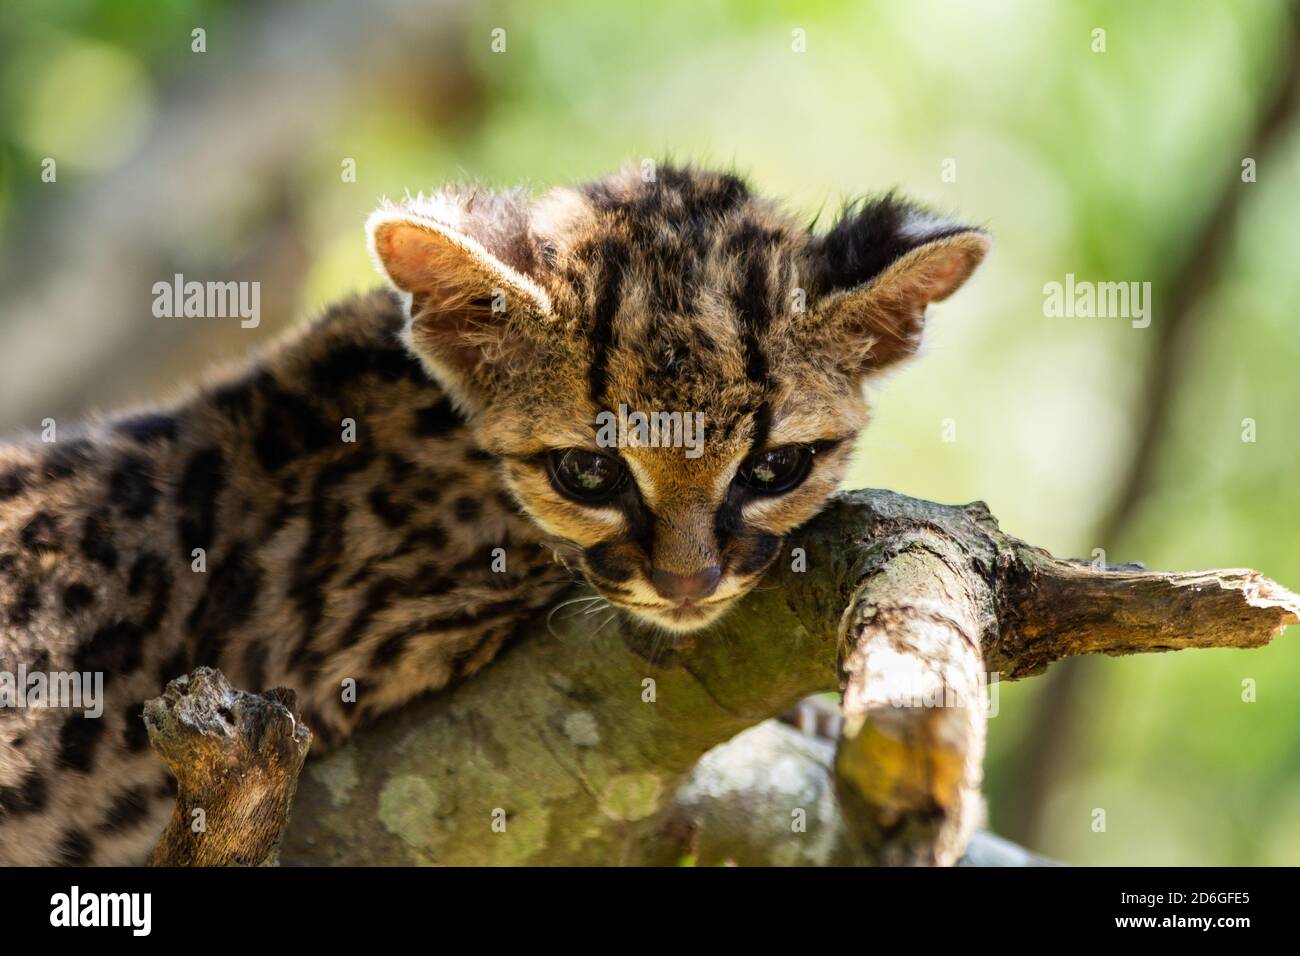 Ocelot (Leopardus pardalis) kitten sitting on a branch in a Costa Rican rain forest Stock Photo